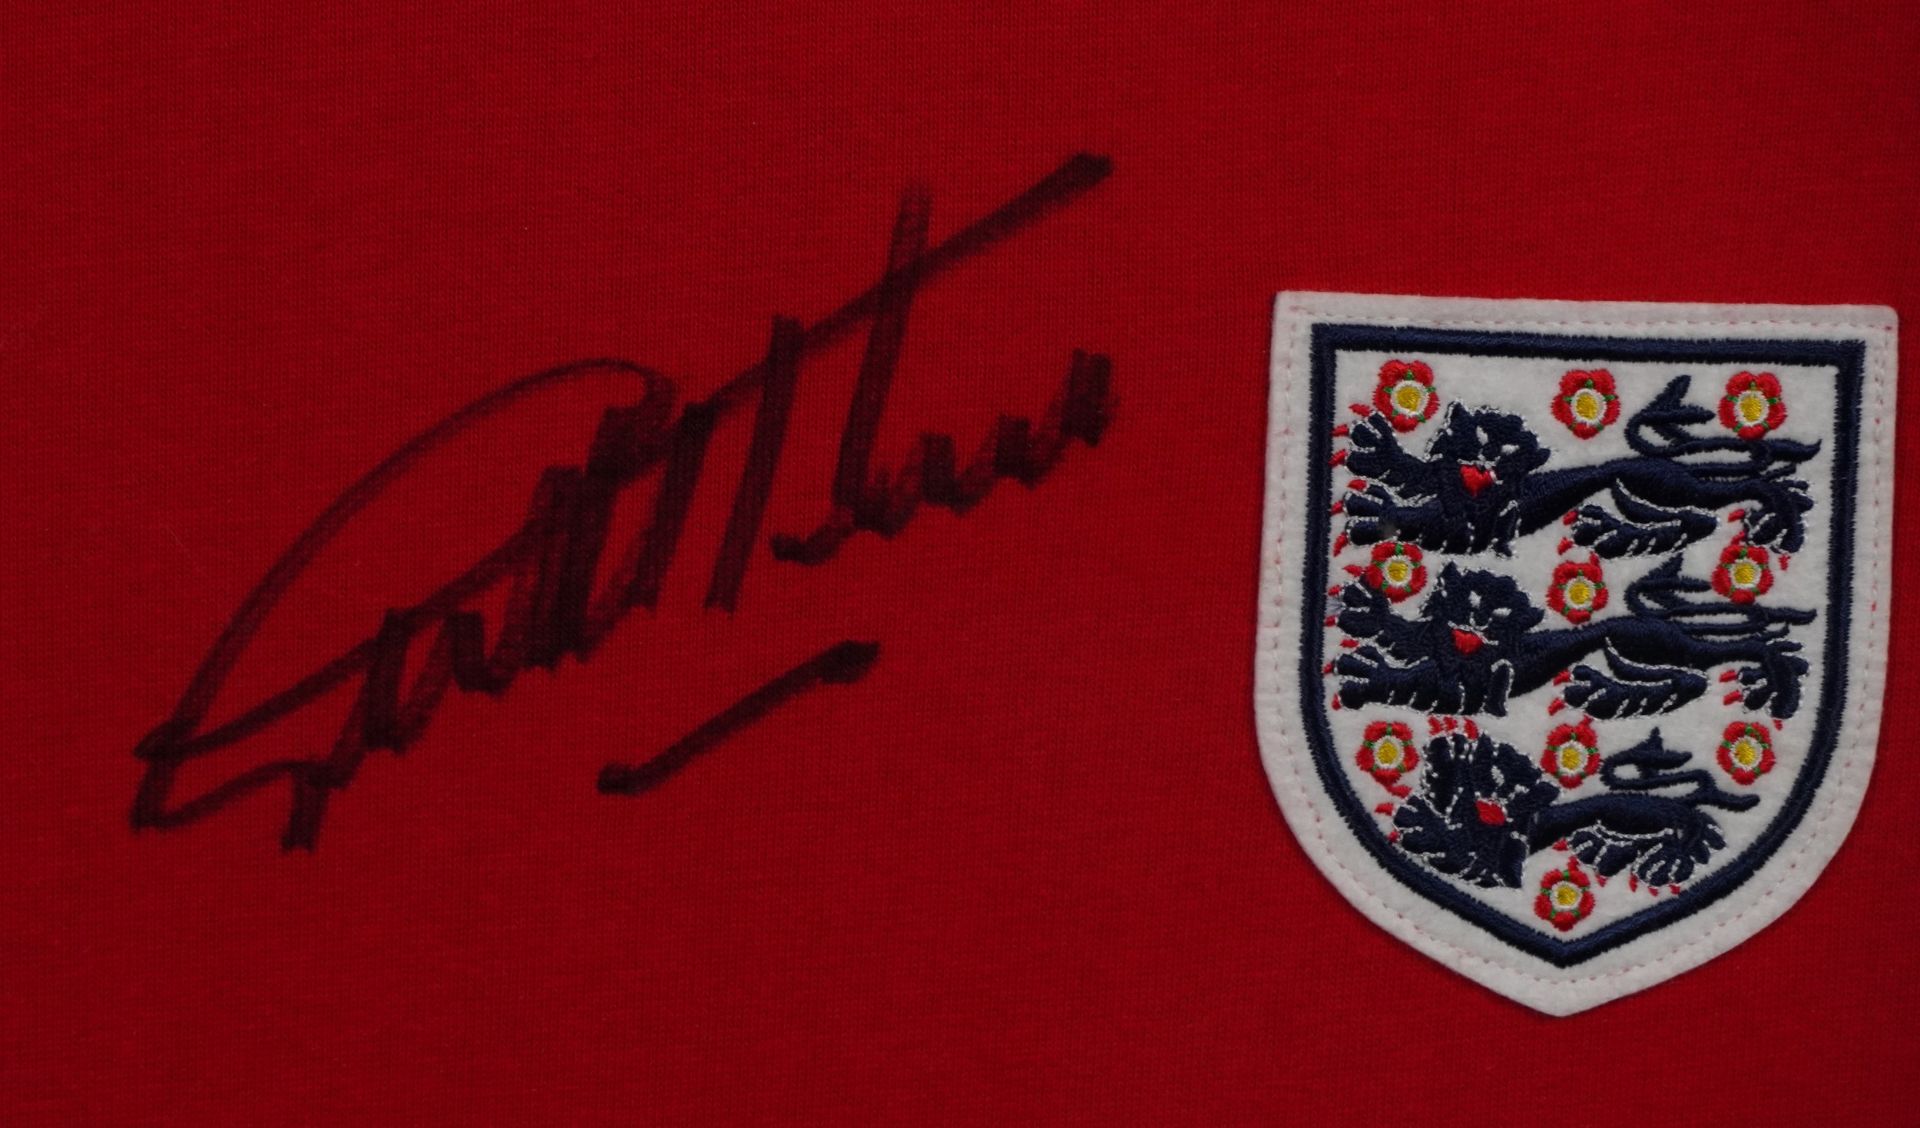 Footballing interest Sir Geoff Hurst display with signed jersey and facsimile World Championship - Bild 2 aus 7